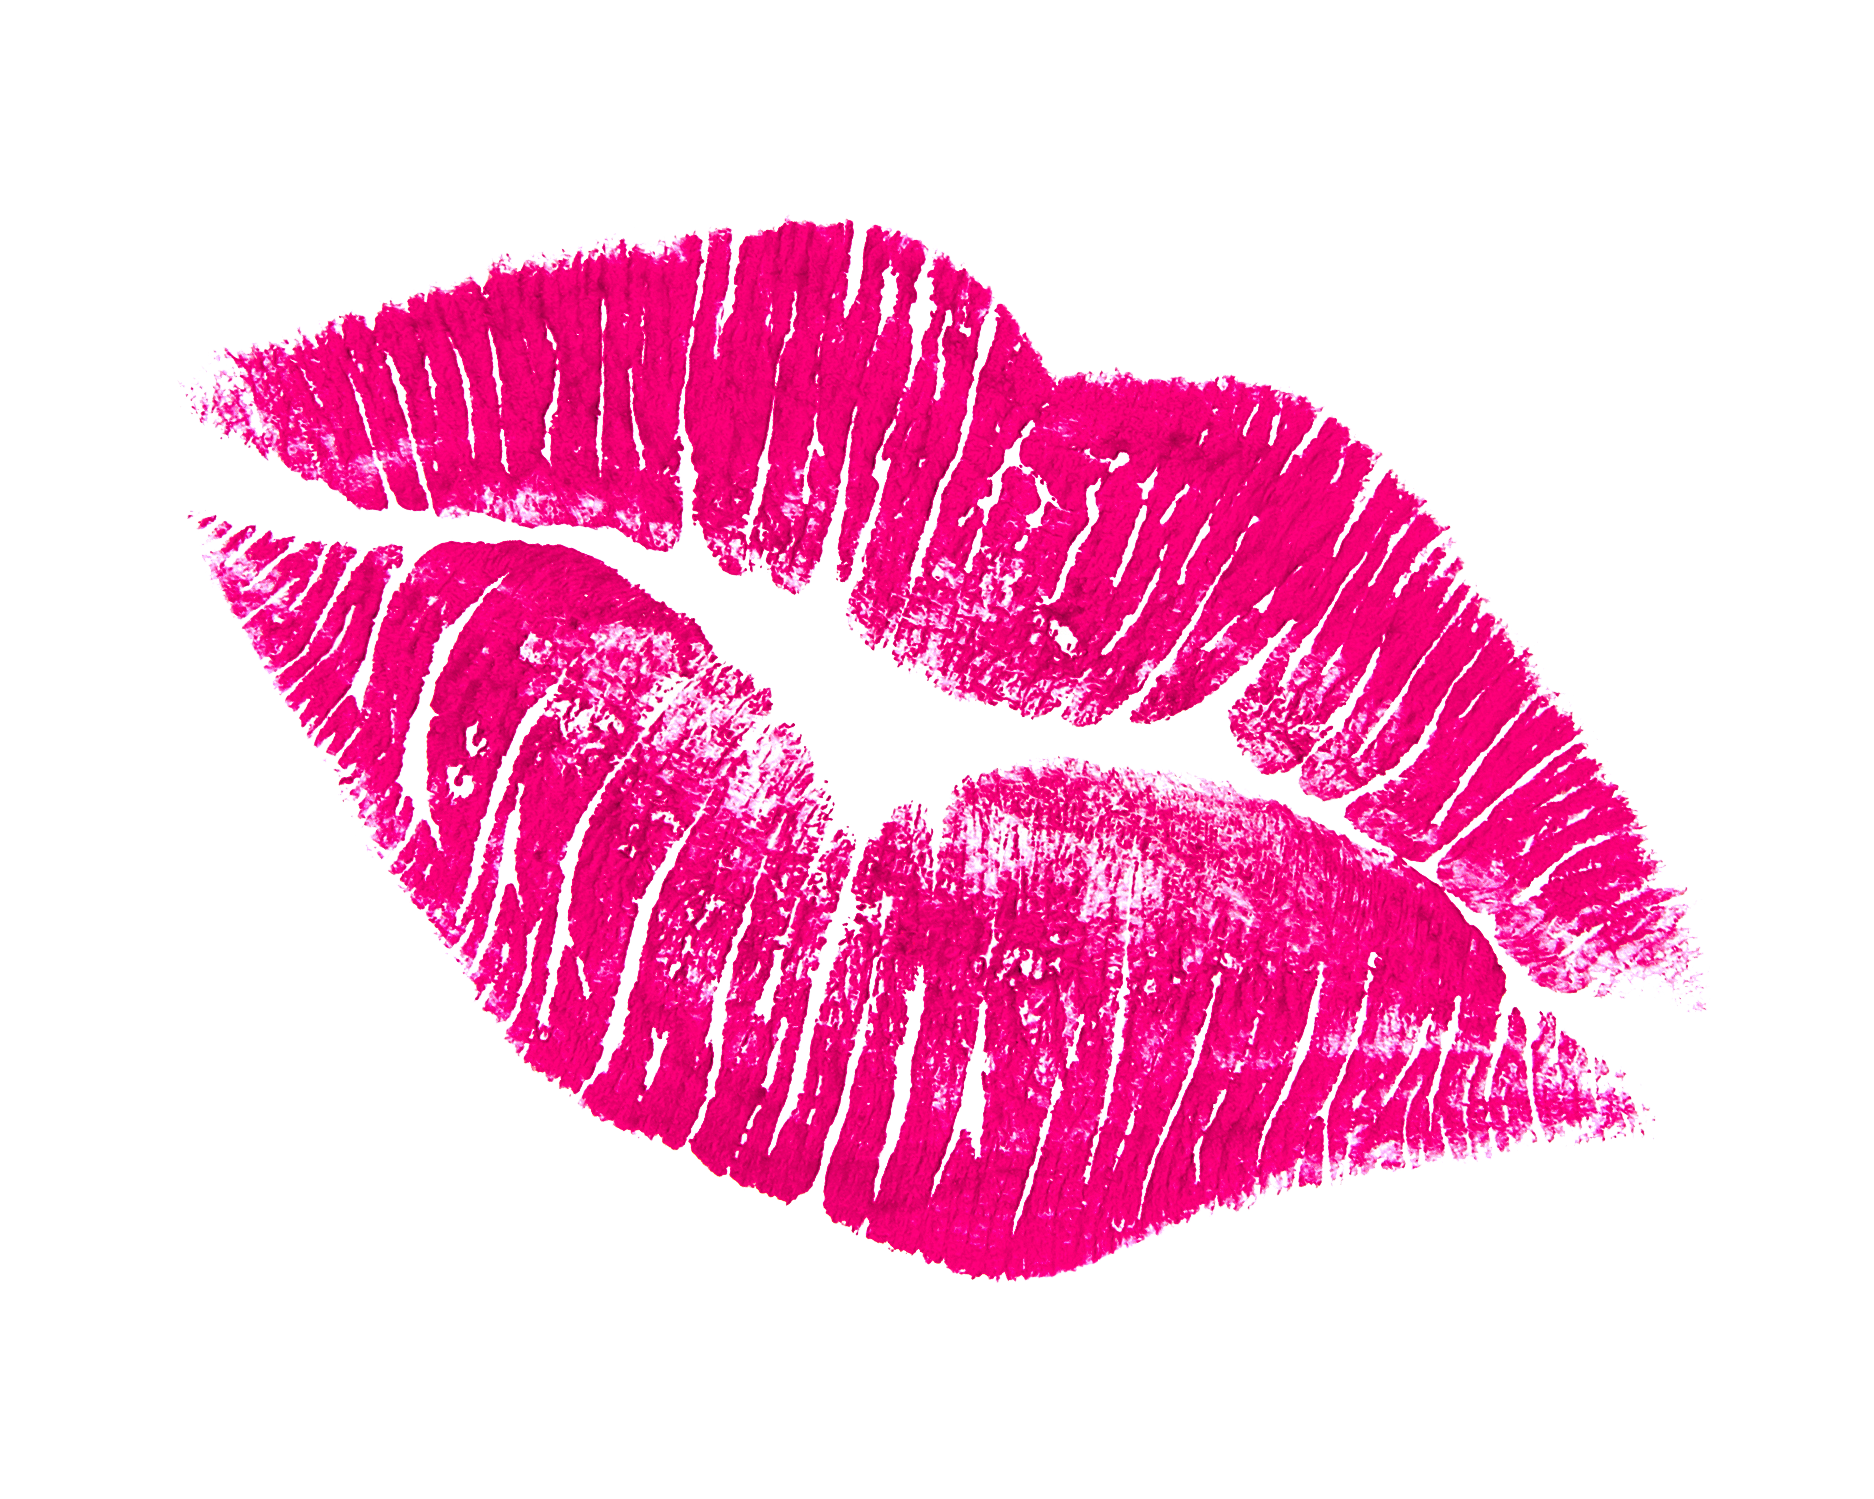 Kiss Lips Transparent